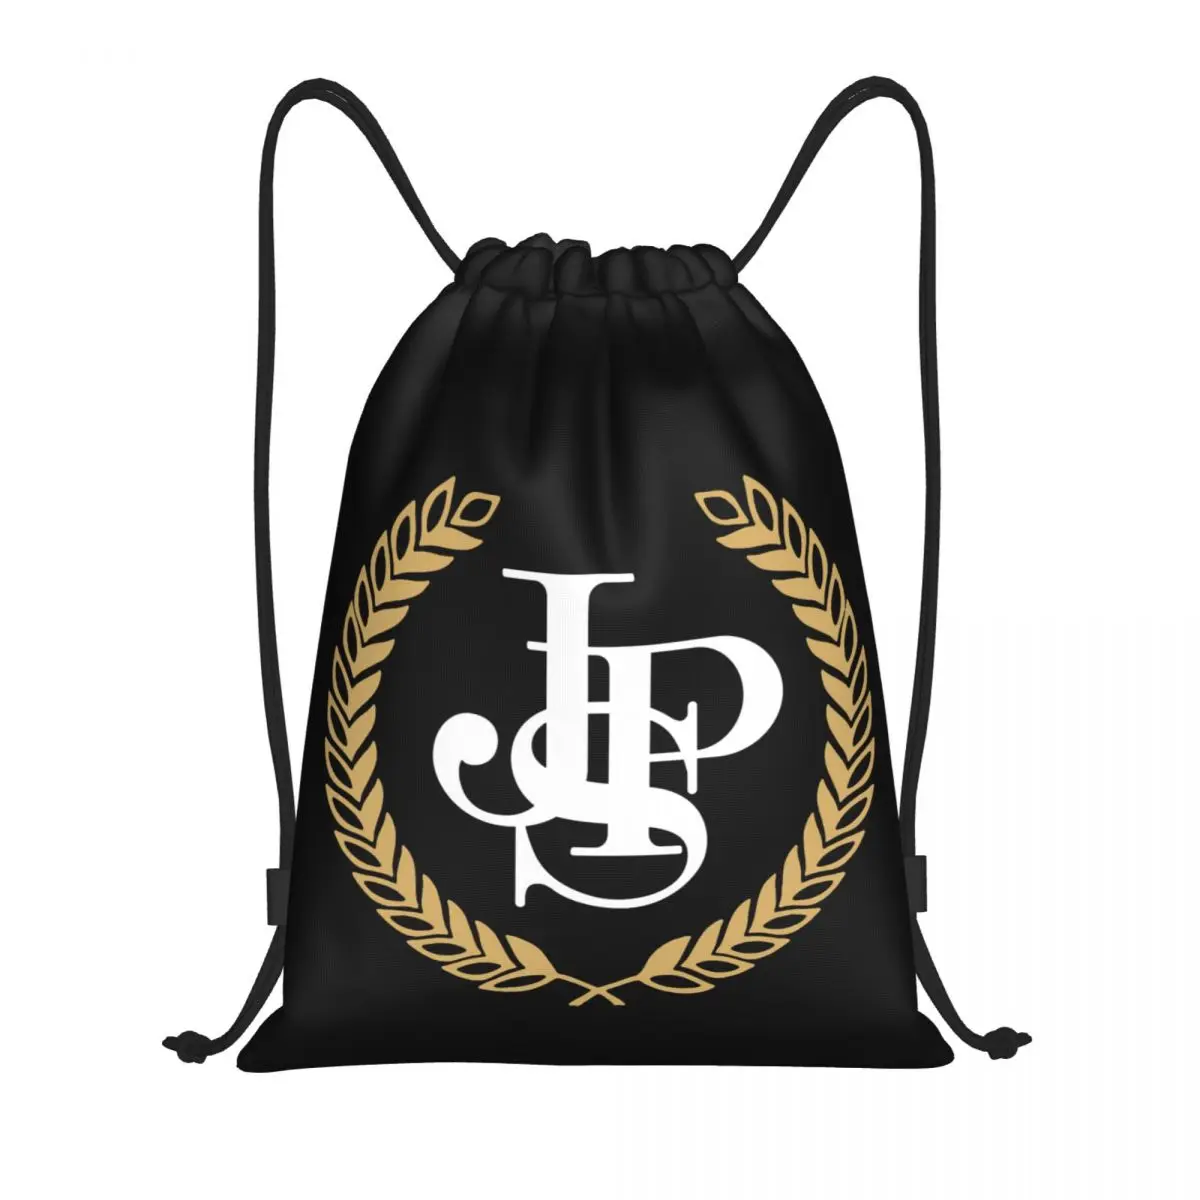 

Бестселлер, рюкзак JPS John Player 7, саркастический рюкзак, сумки на шнурке, сумка для спортзала, графическая, крутая, прочная